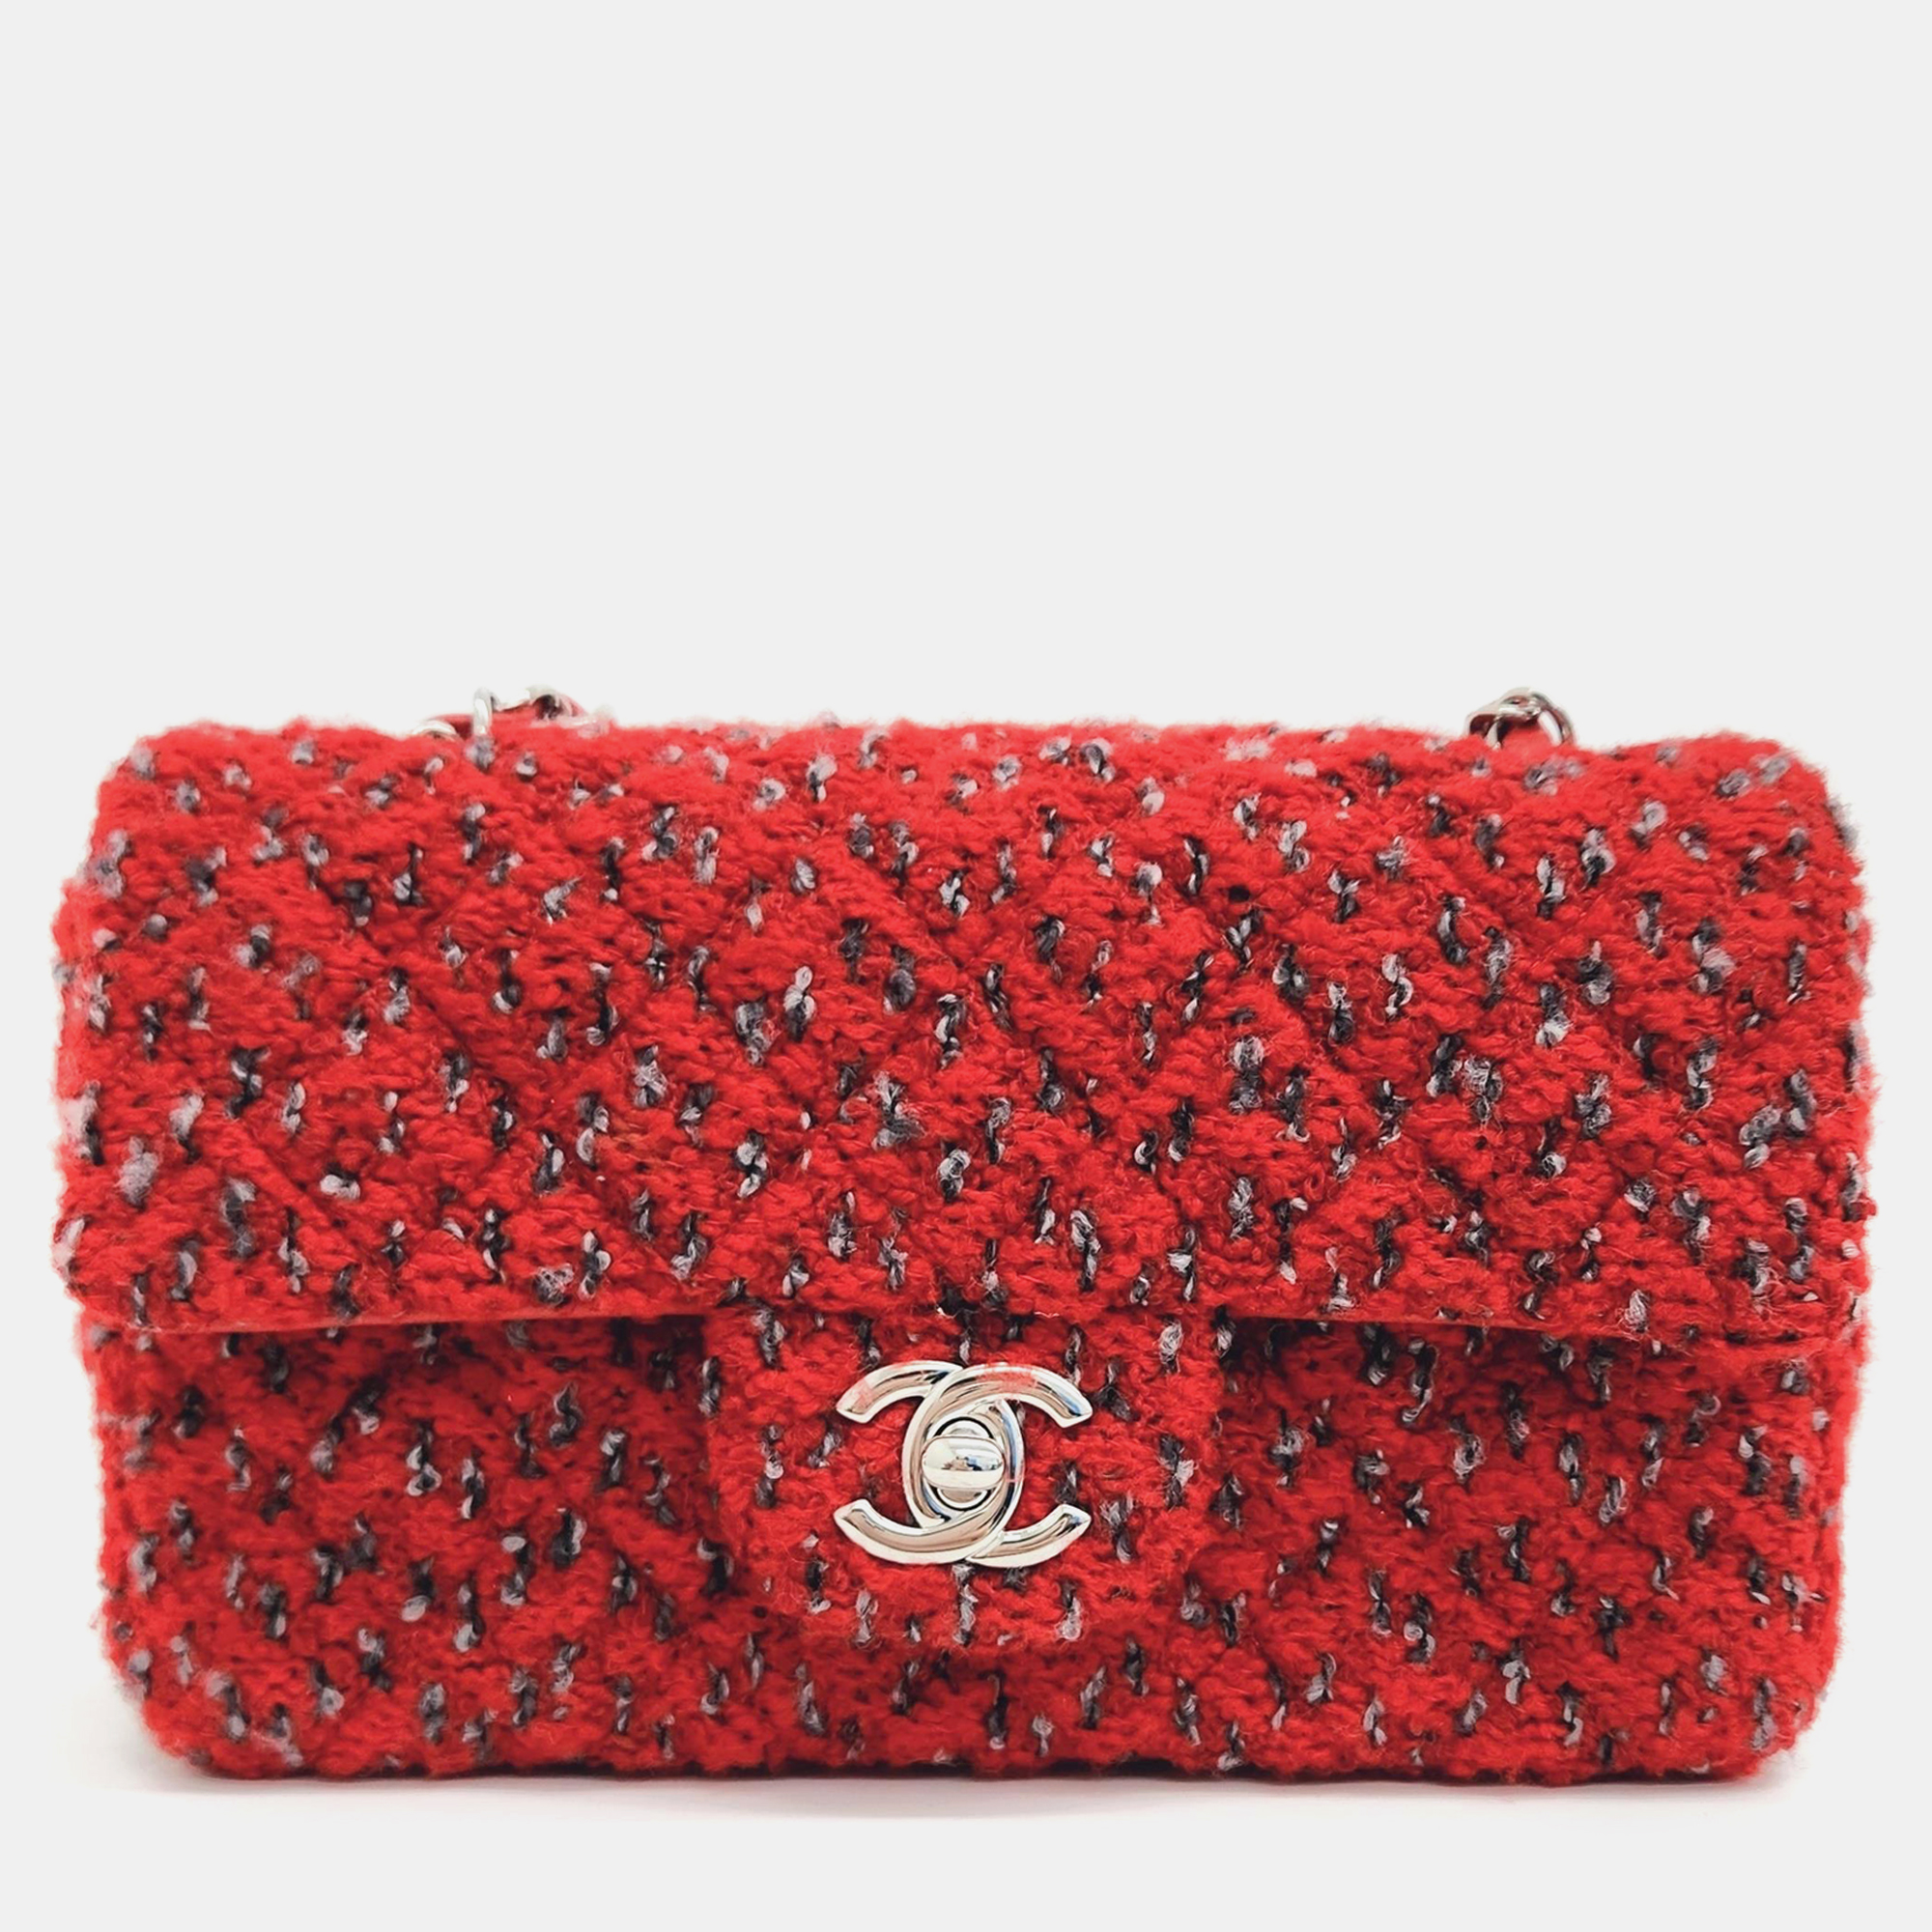 Chanel red tweed mini rectangular flap bag